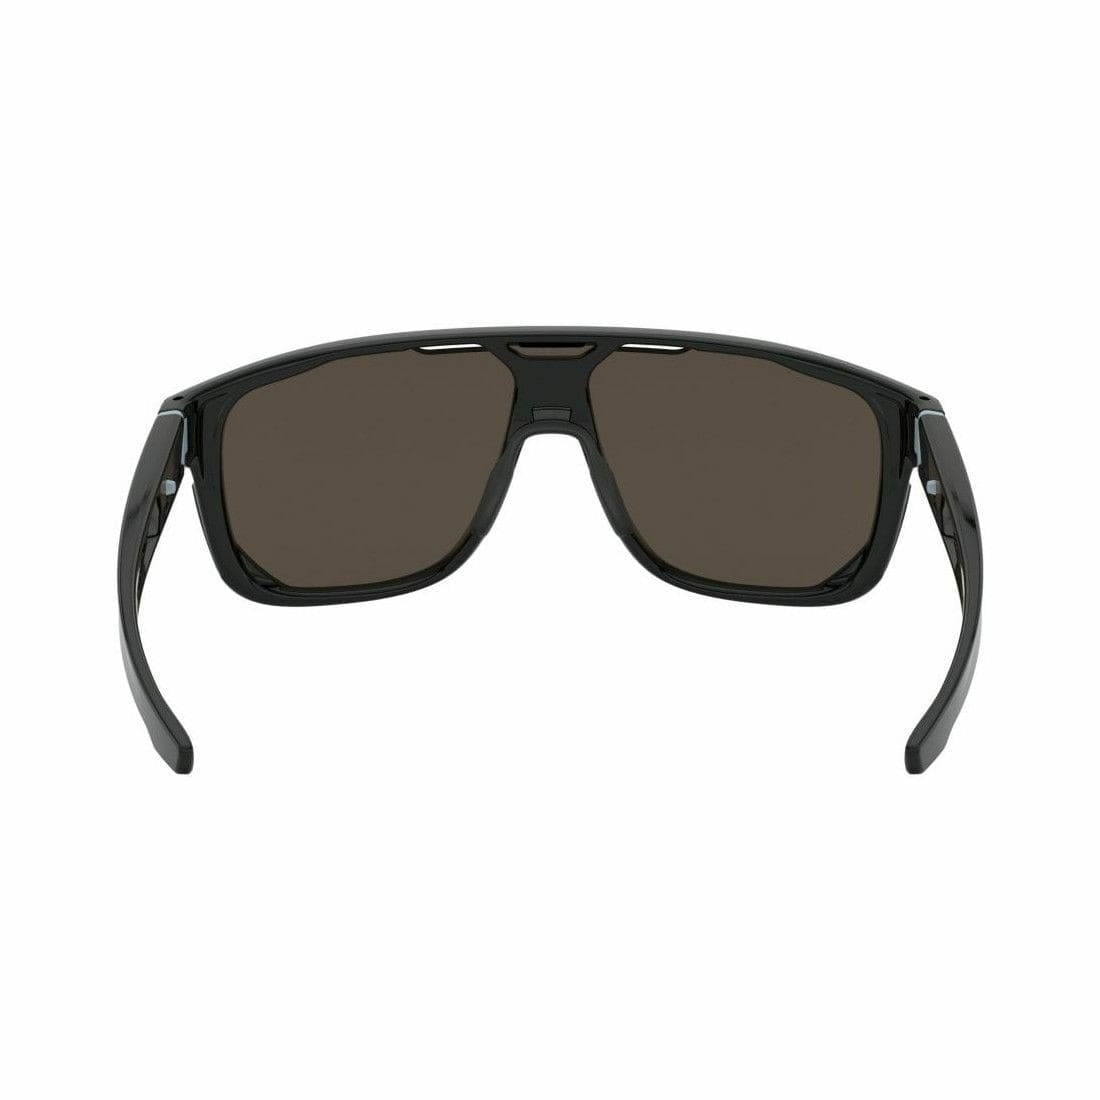 Oakley OO9387-1631 Crossrange Shield Prizm Grey Single Lens Polished Black Sunglasses 888392428240